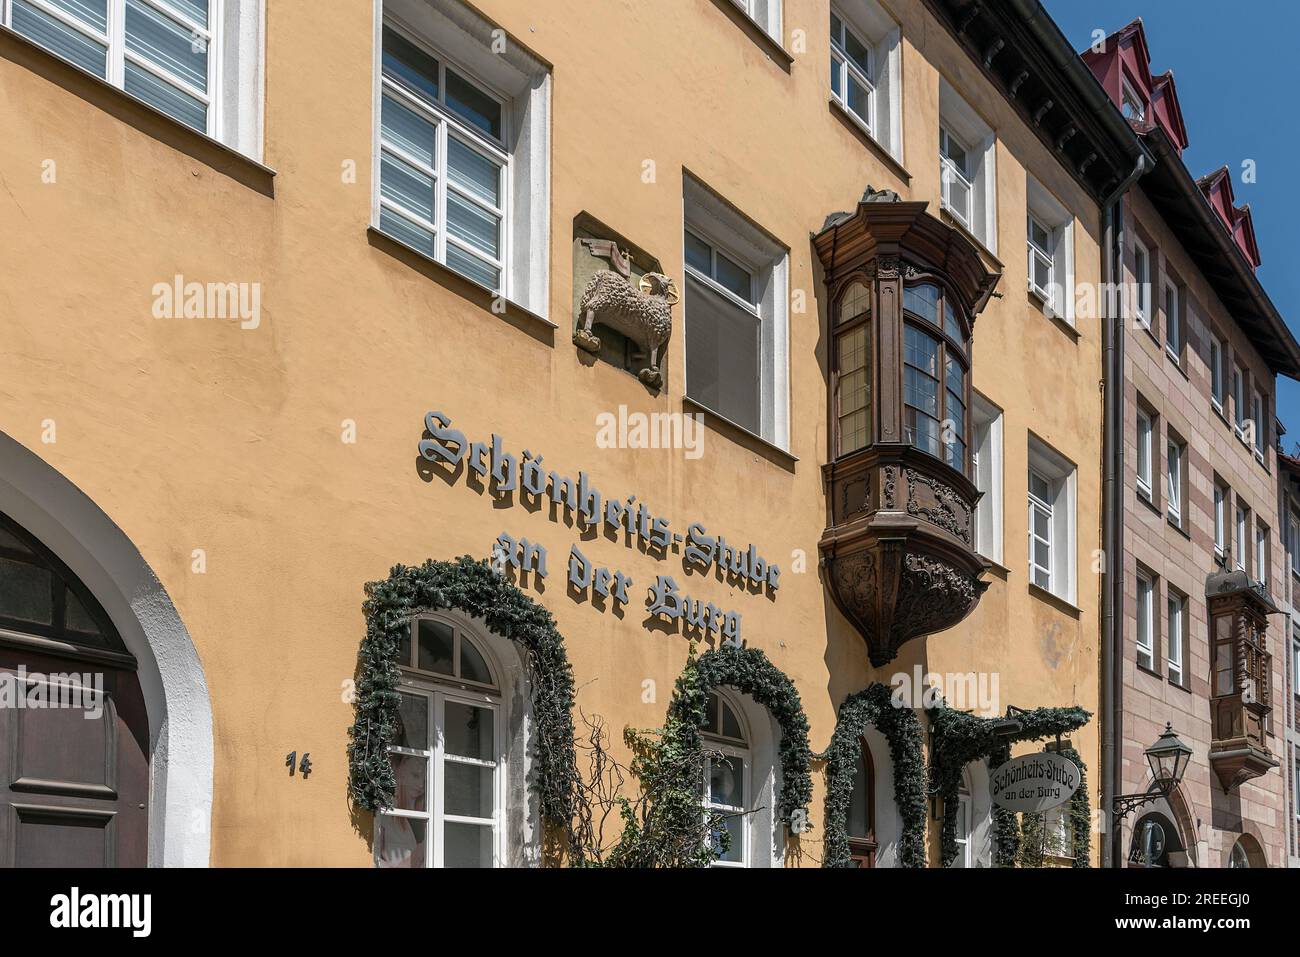 House sign, former Gasthaus Lamm, Lammsgasse 14, Nuremberg, Middle Franconia, Bavaria, Germany Stock Photo